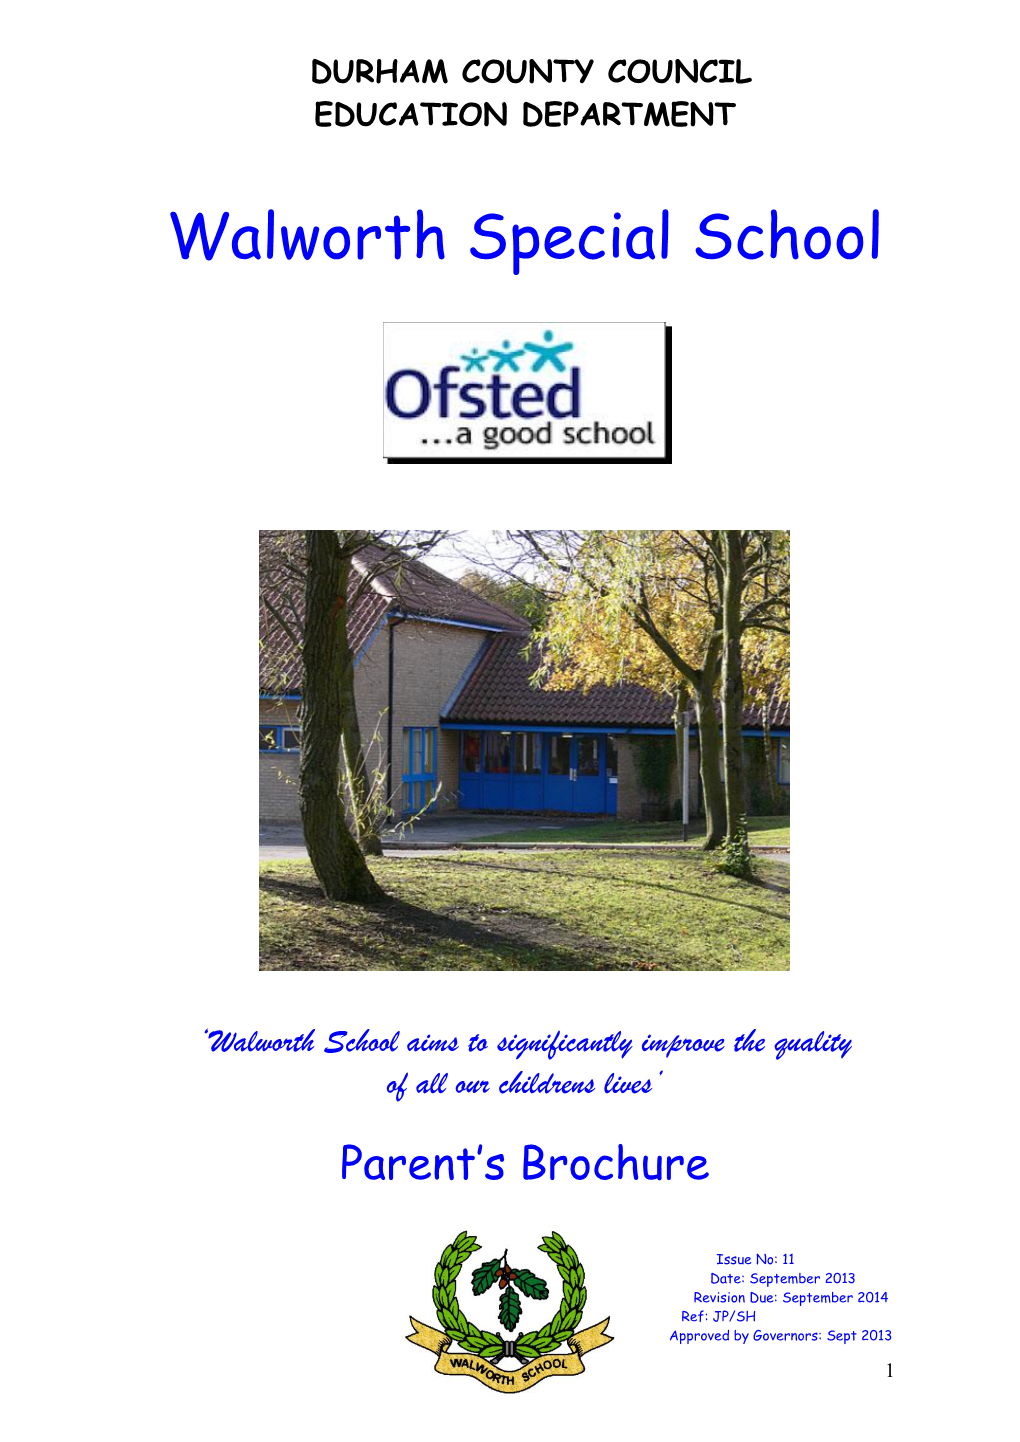 Walworth School Contact Information